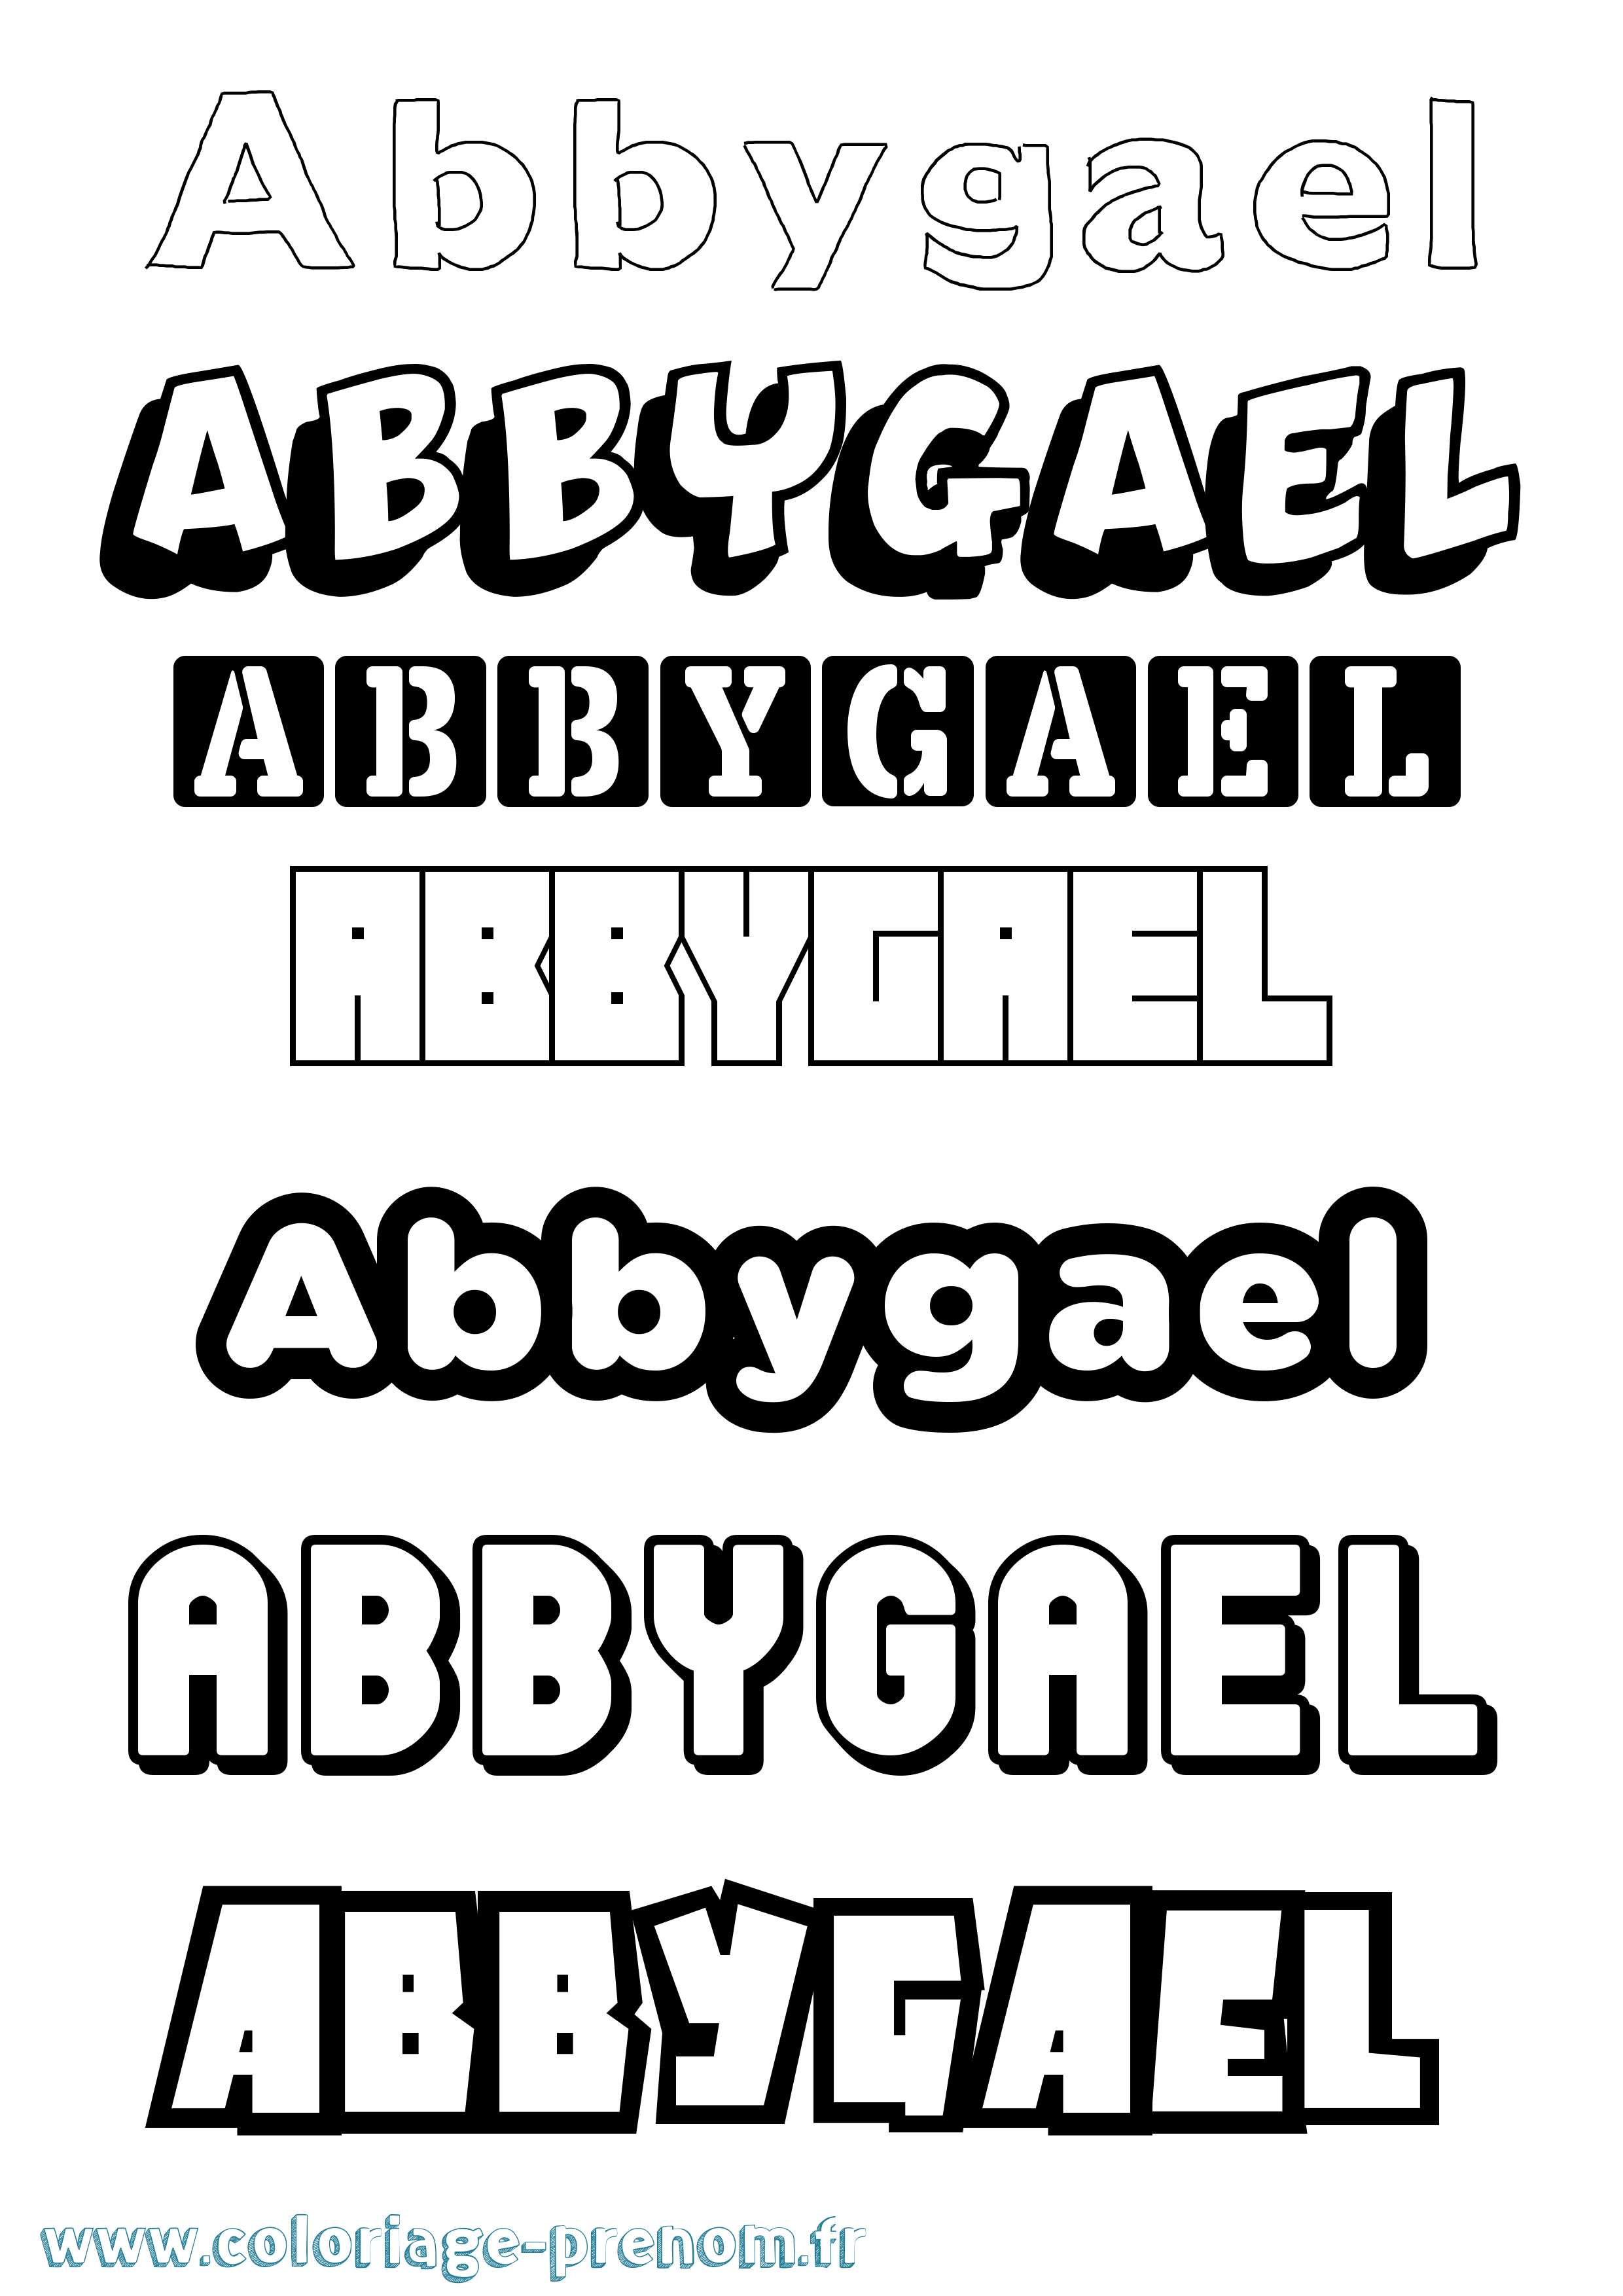 Coloriage prénom Abbygael